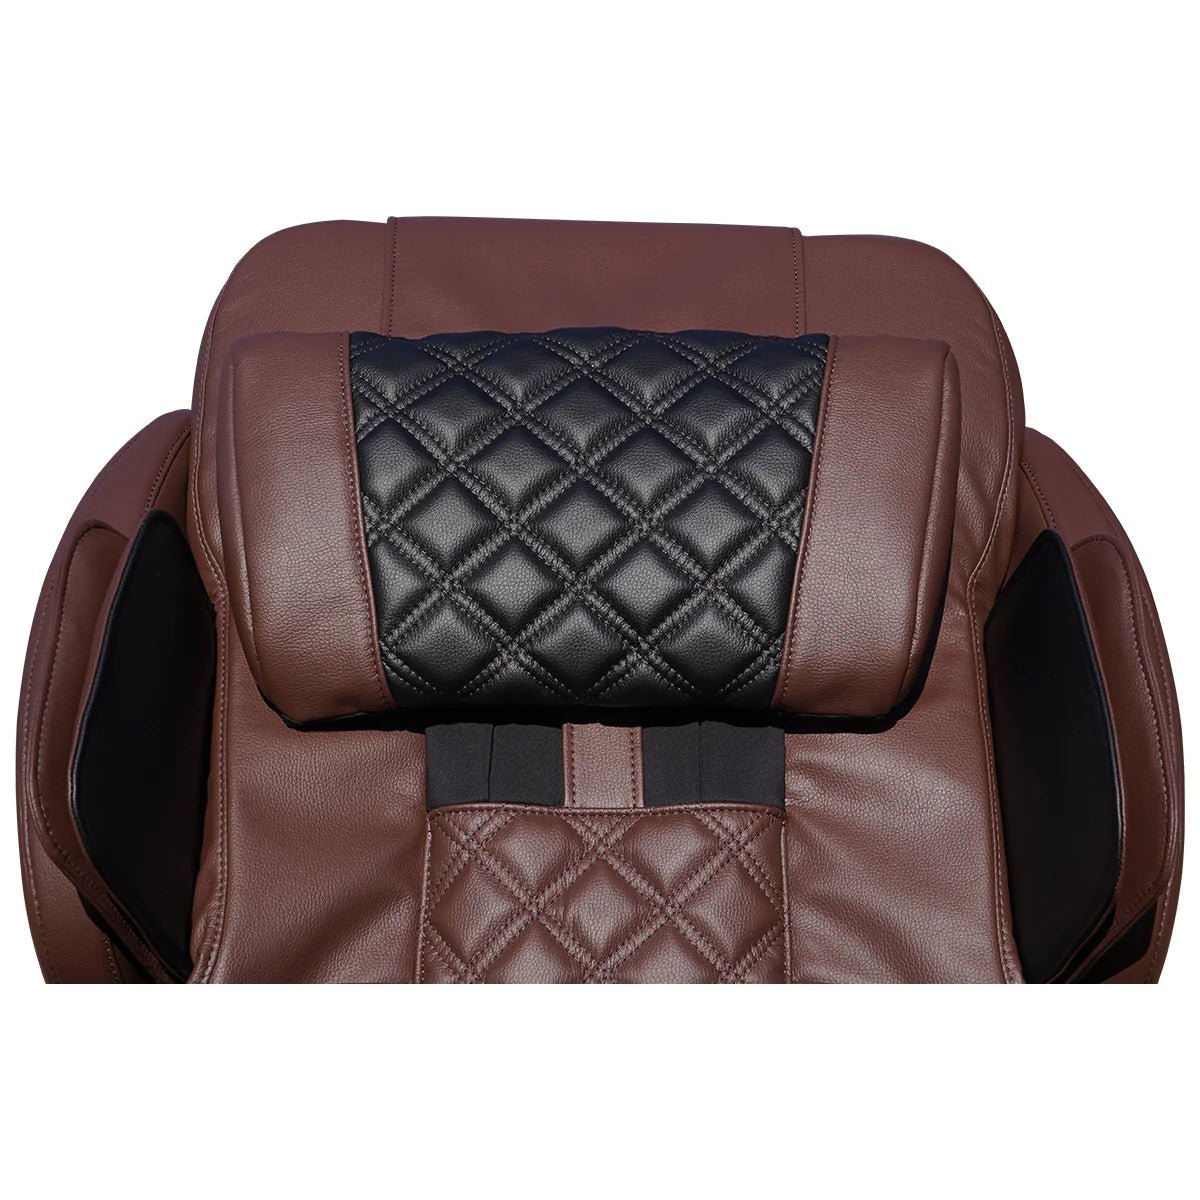 LuracoMassage ChairLuraco Model 3 Hybrid SL Medical Massage ChairBlackMassage Chair Heaven